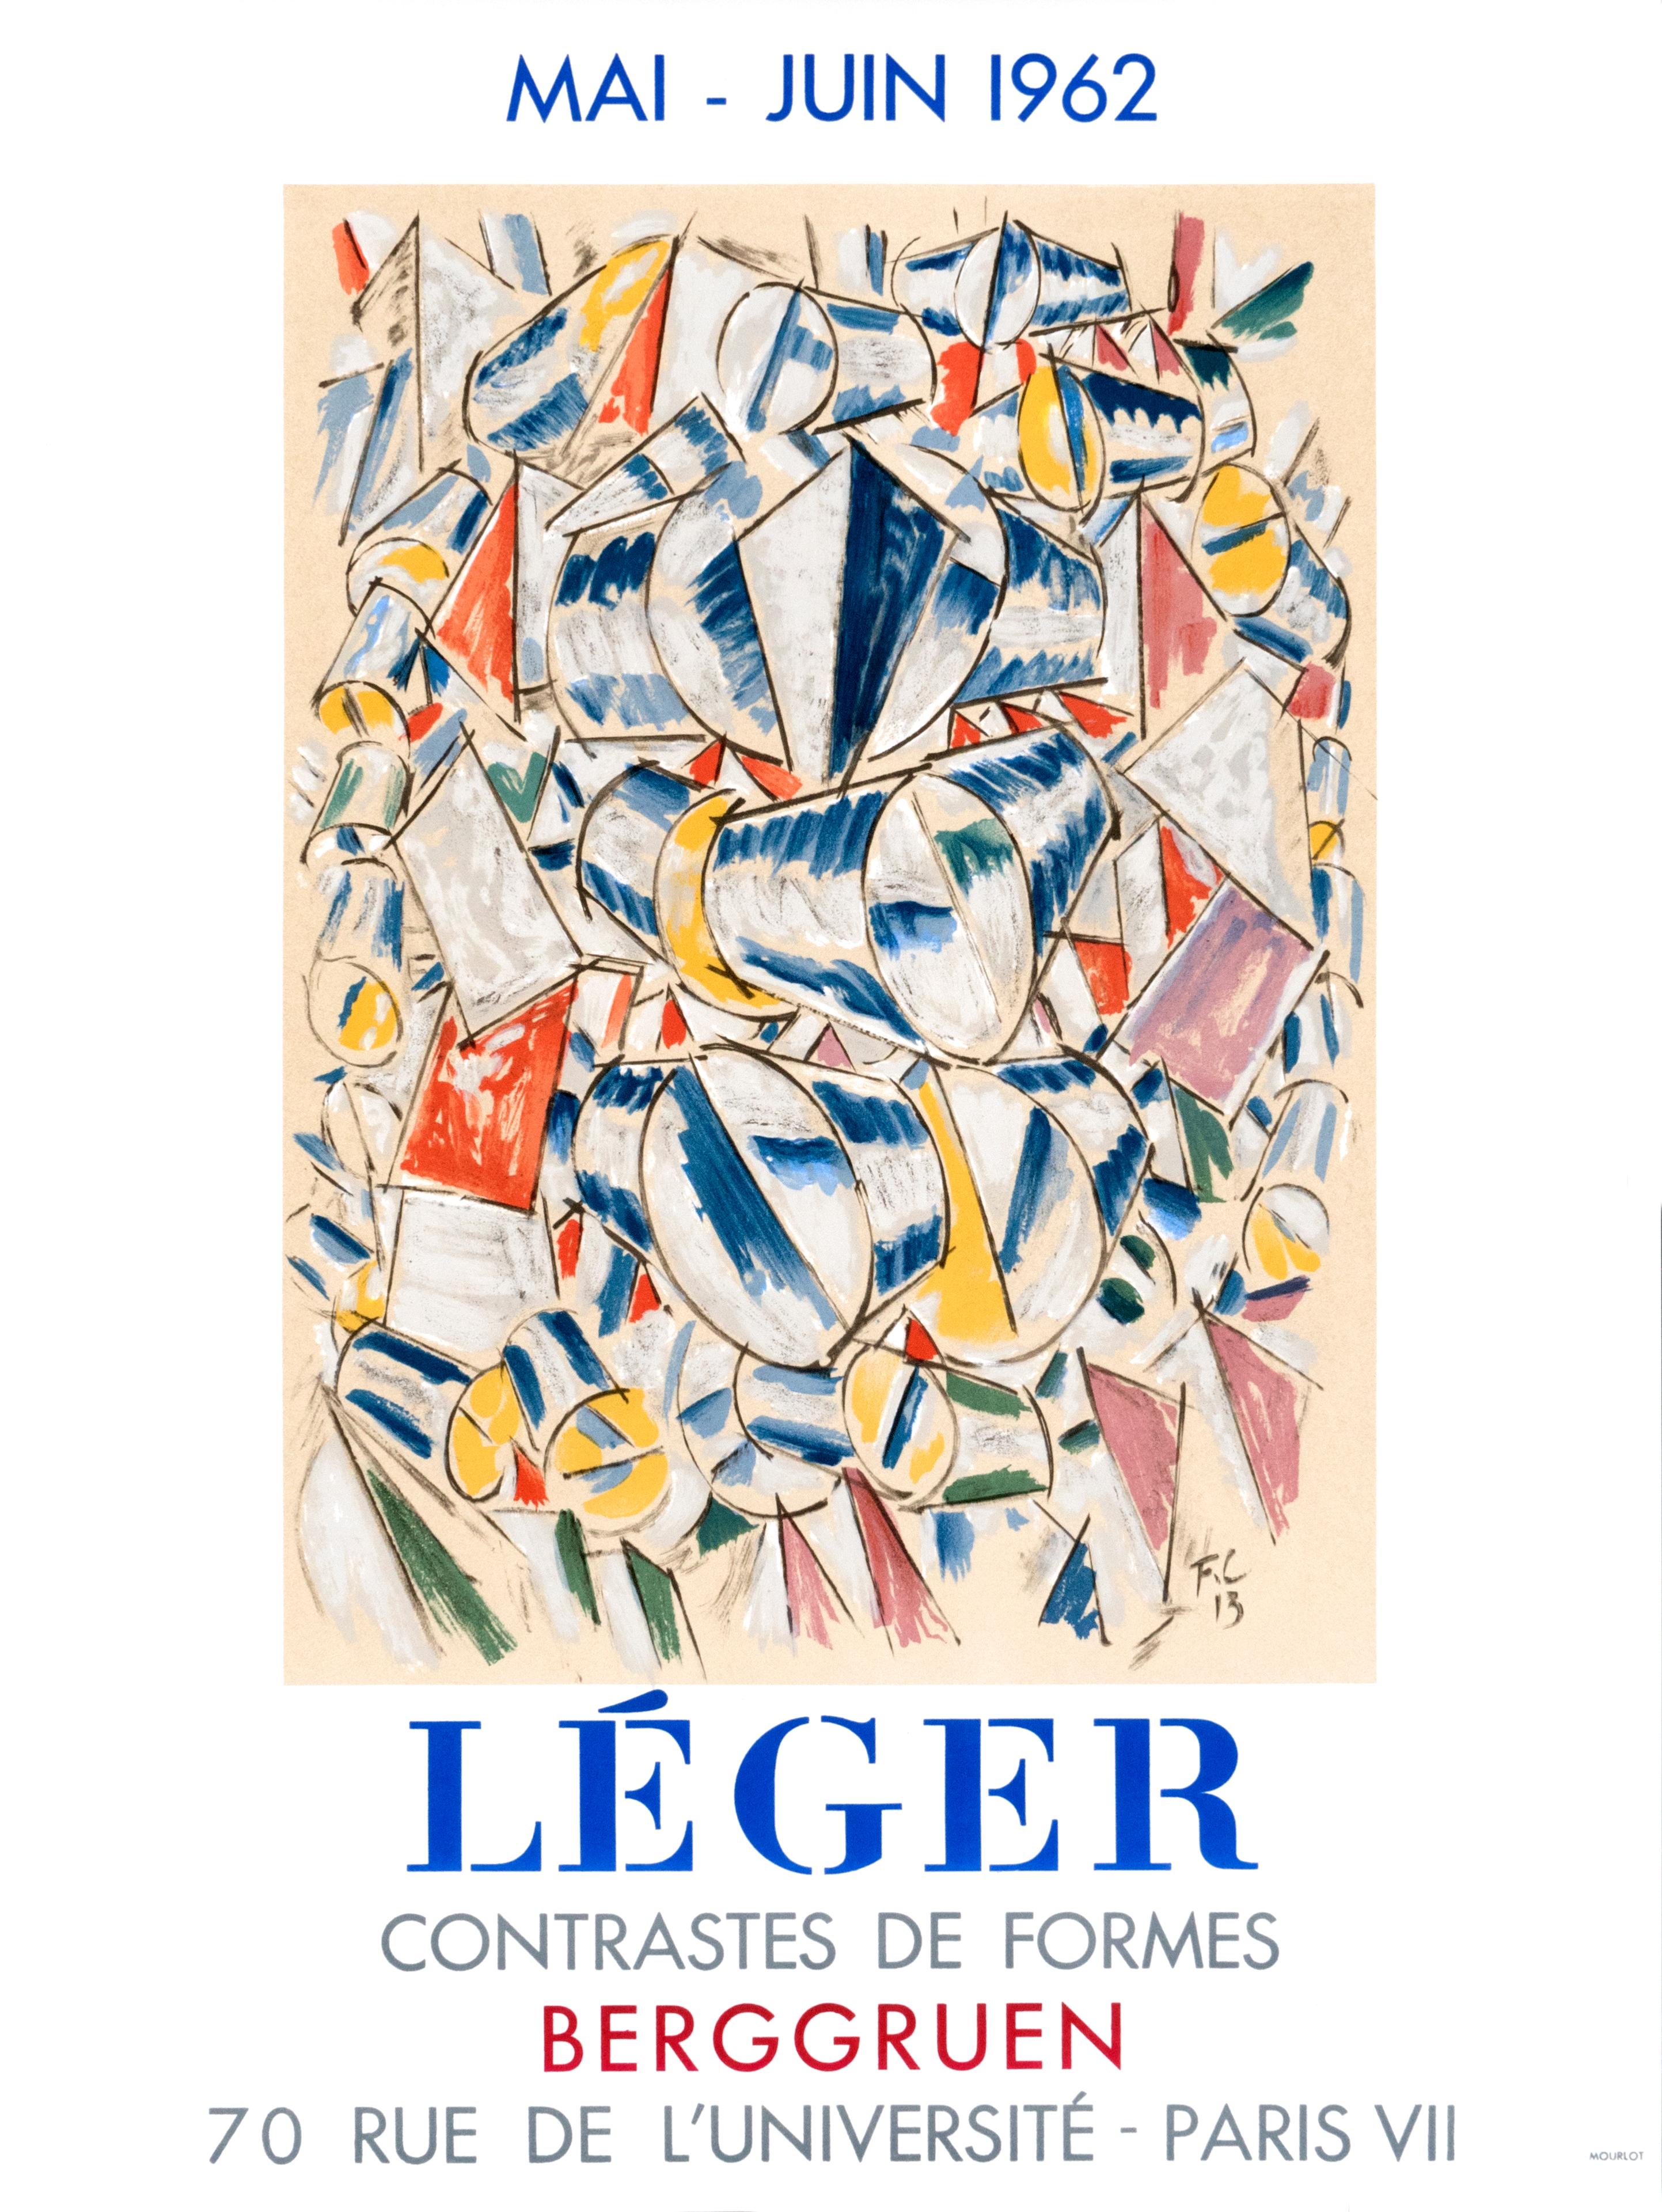 (after) Fernand Léger Abstract Print - "Leger - Contrastes de Formes - Berggruen" Original Vintage Exhibition Poster